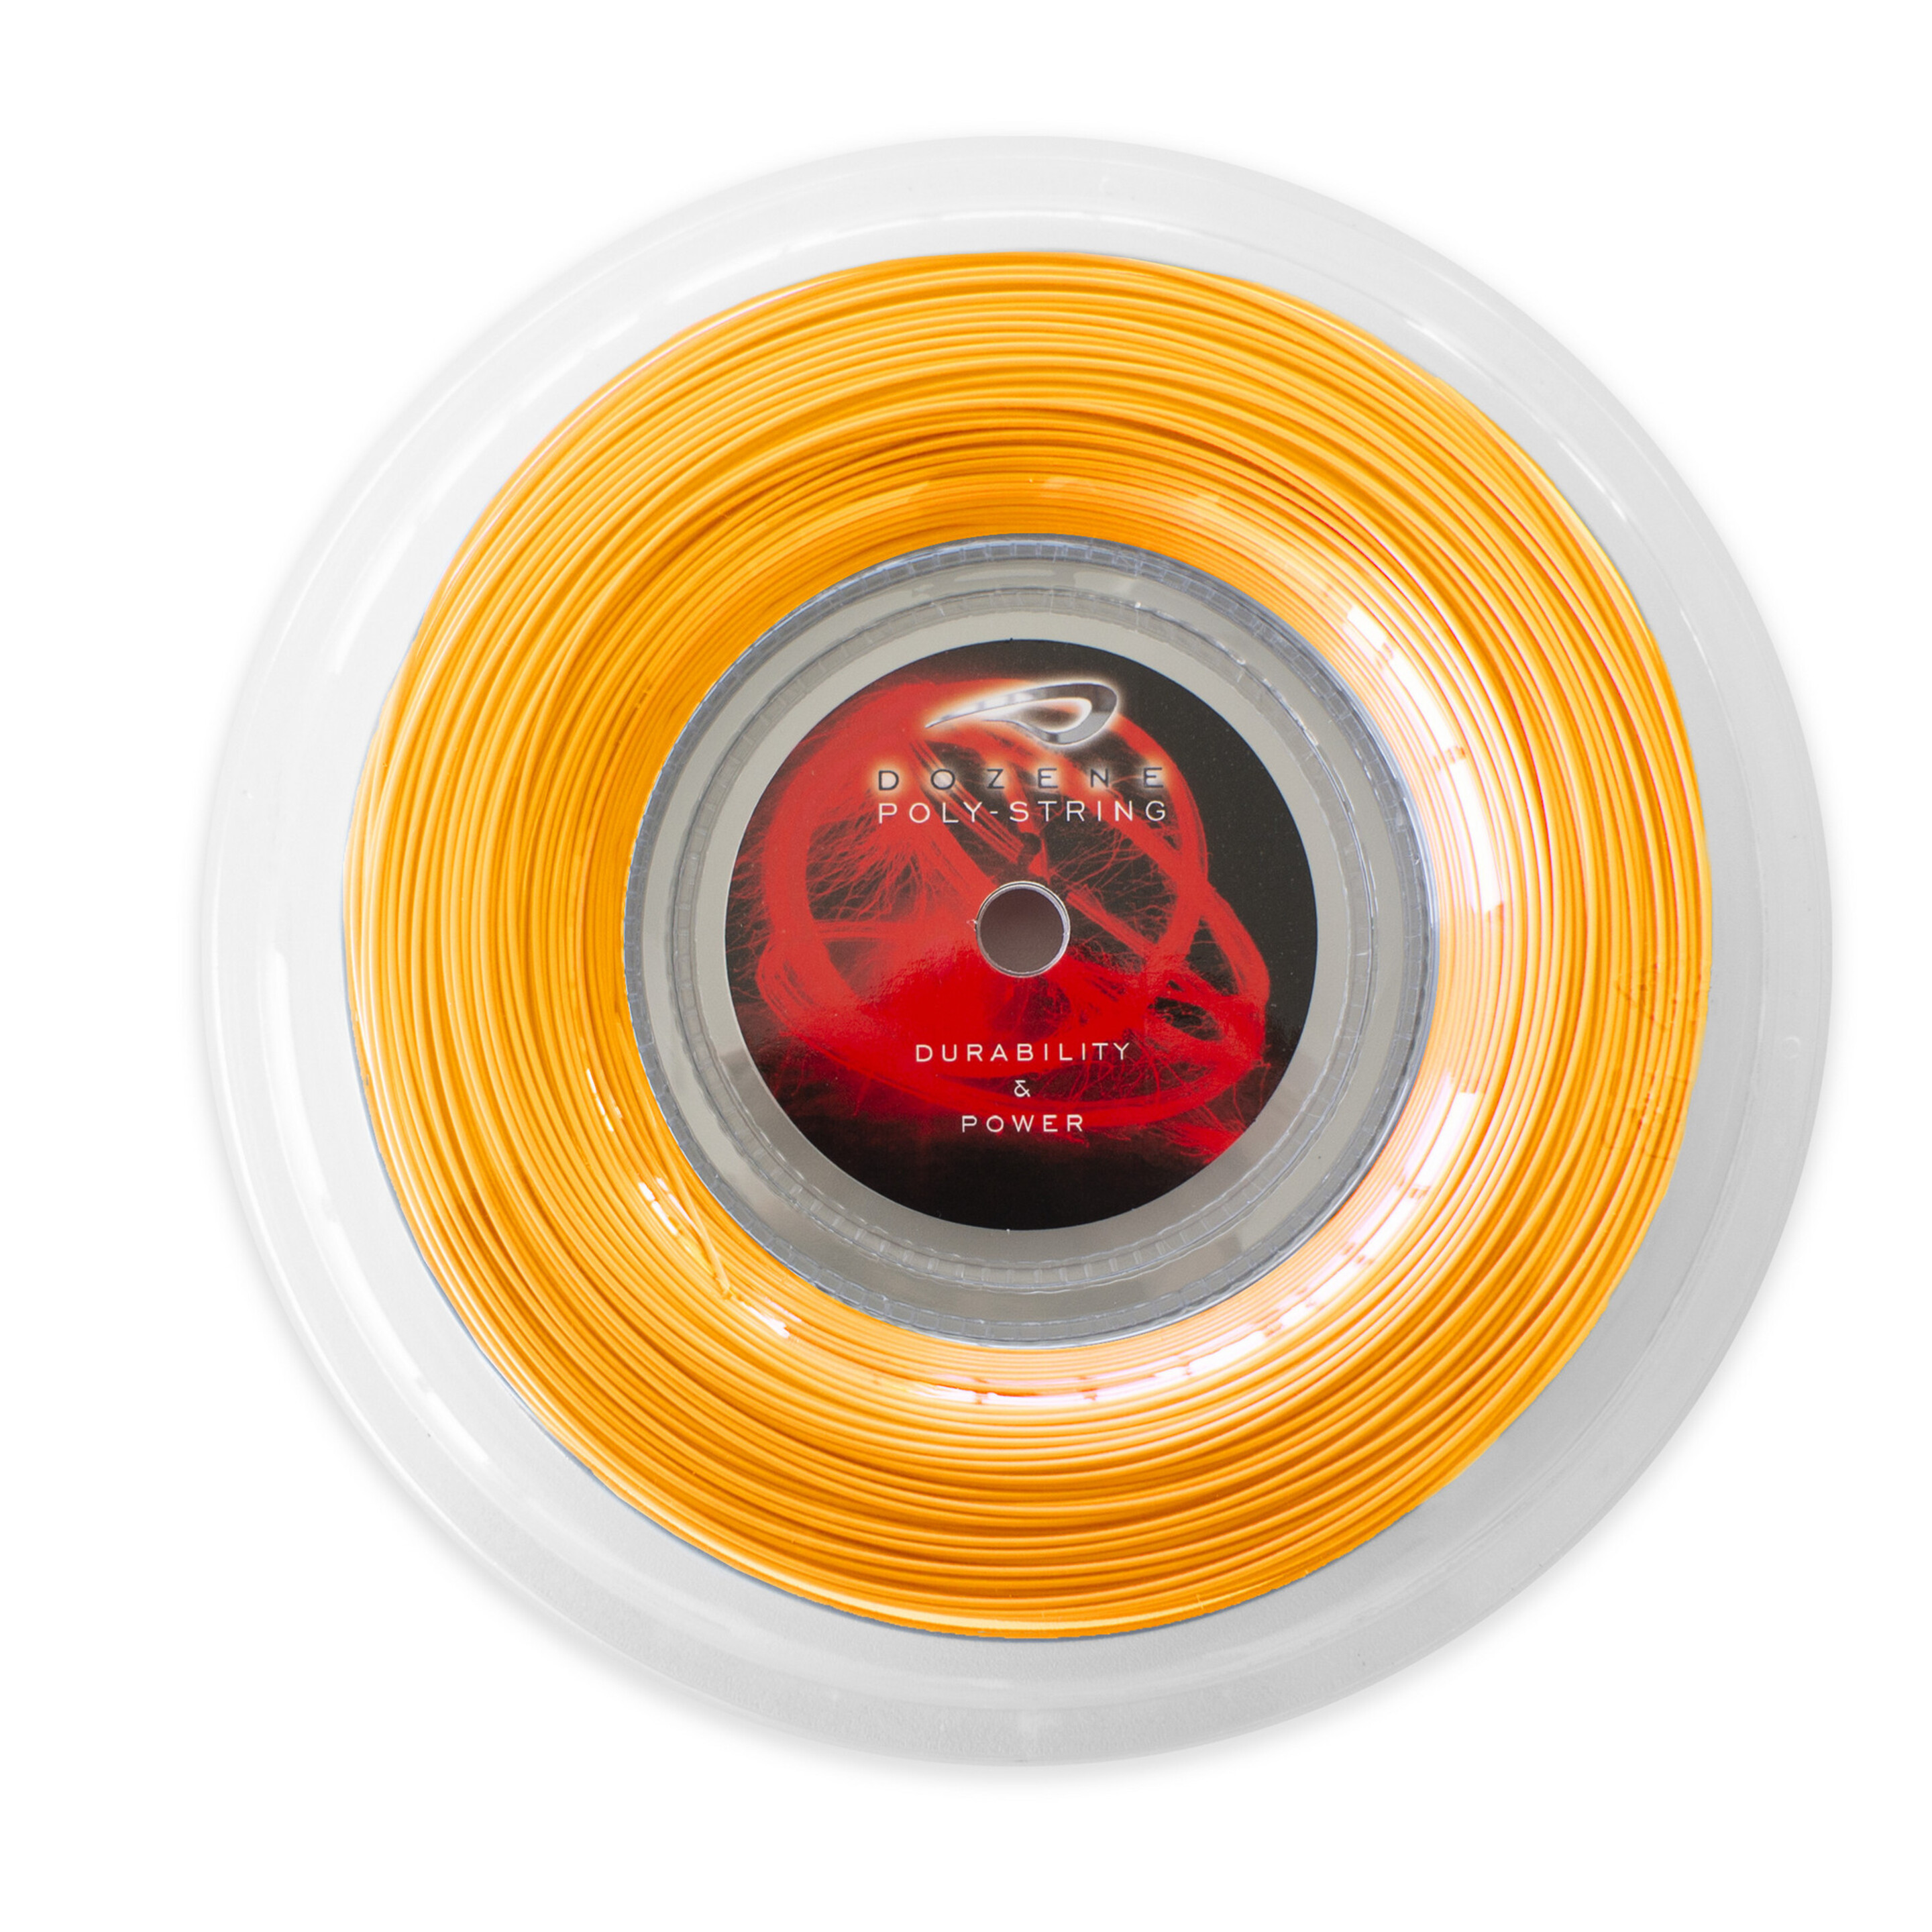 String De Tênis. 200m 125mm Dozene - amarillo - 